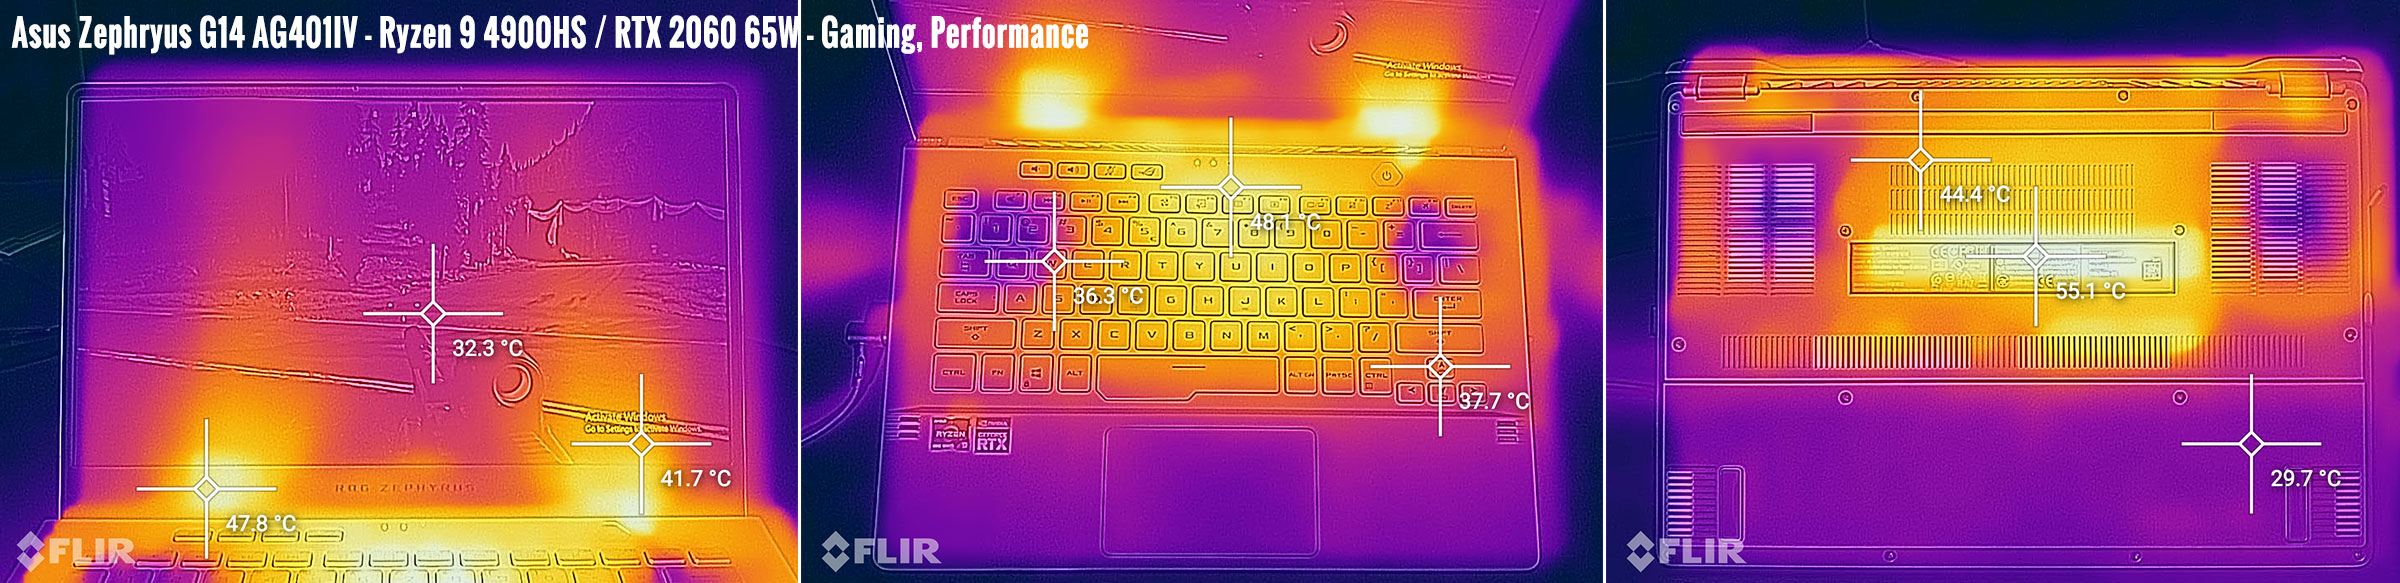 temperatures zephyrusg14 gaming performance